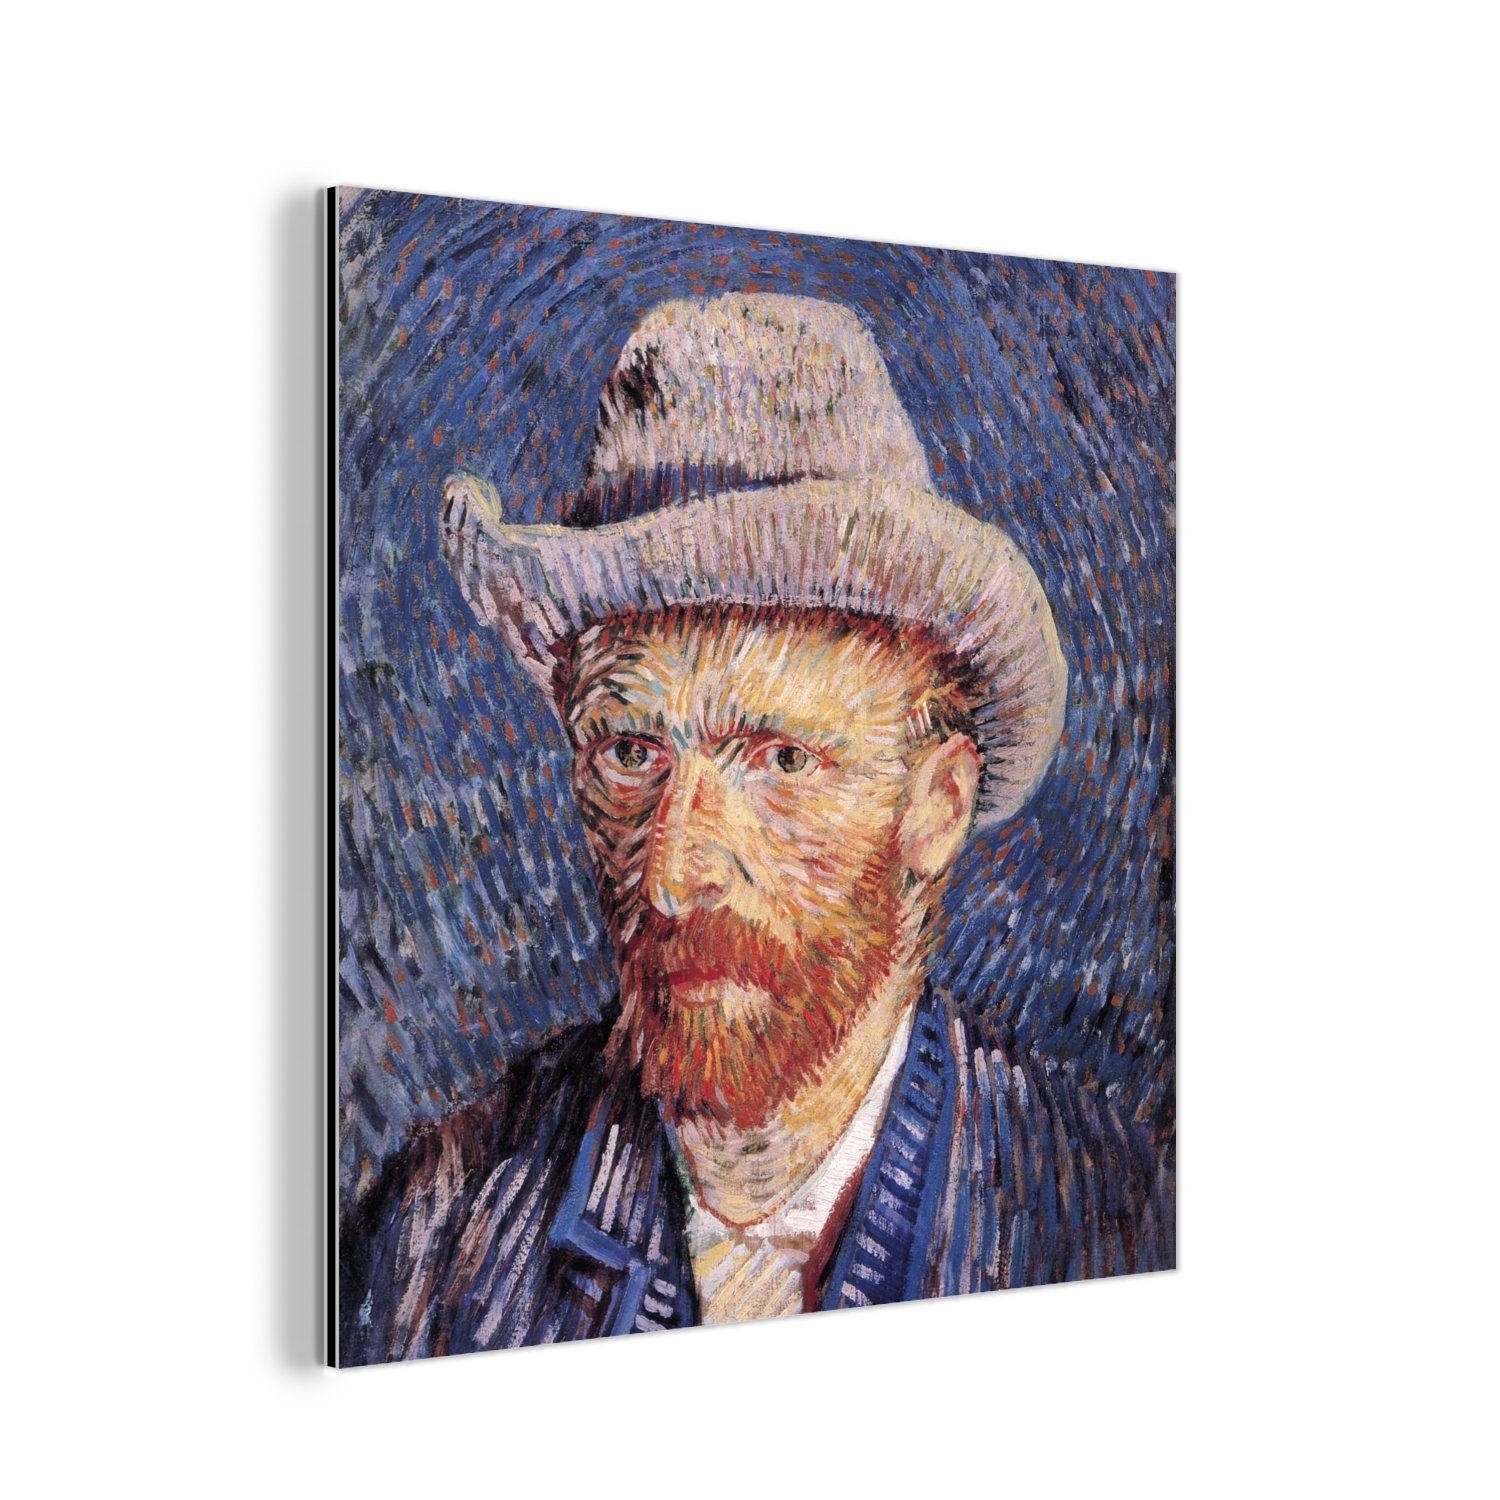 MuchoWow Metallbild Selbstbildnis mit grauem Filzhut - Vincent van Gogh, (1 St), Alu-Dibond-Druck, Gemälde aus Metall, Aluminium deko